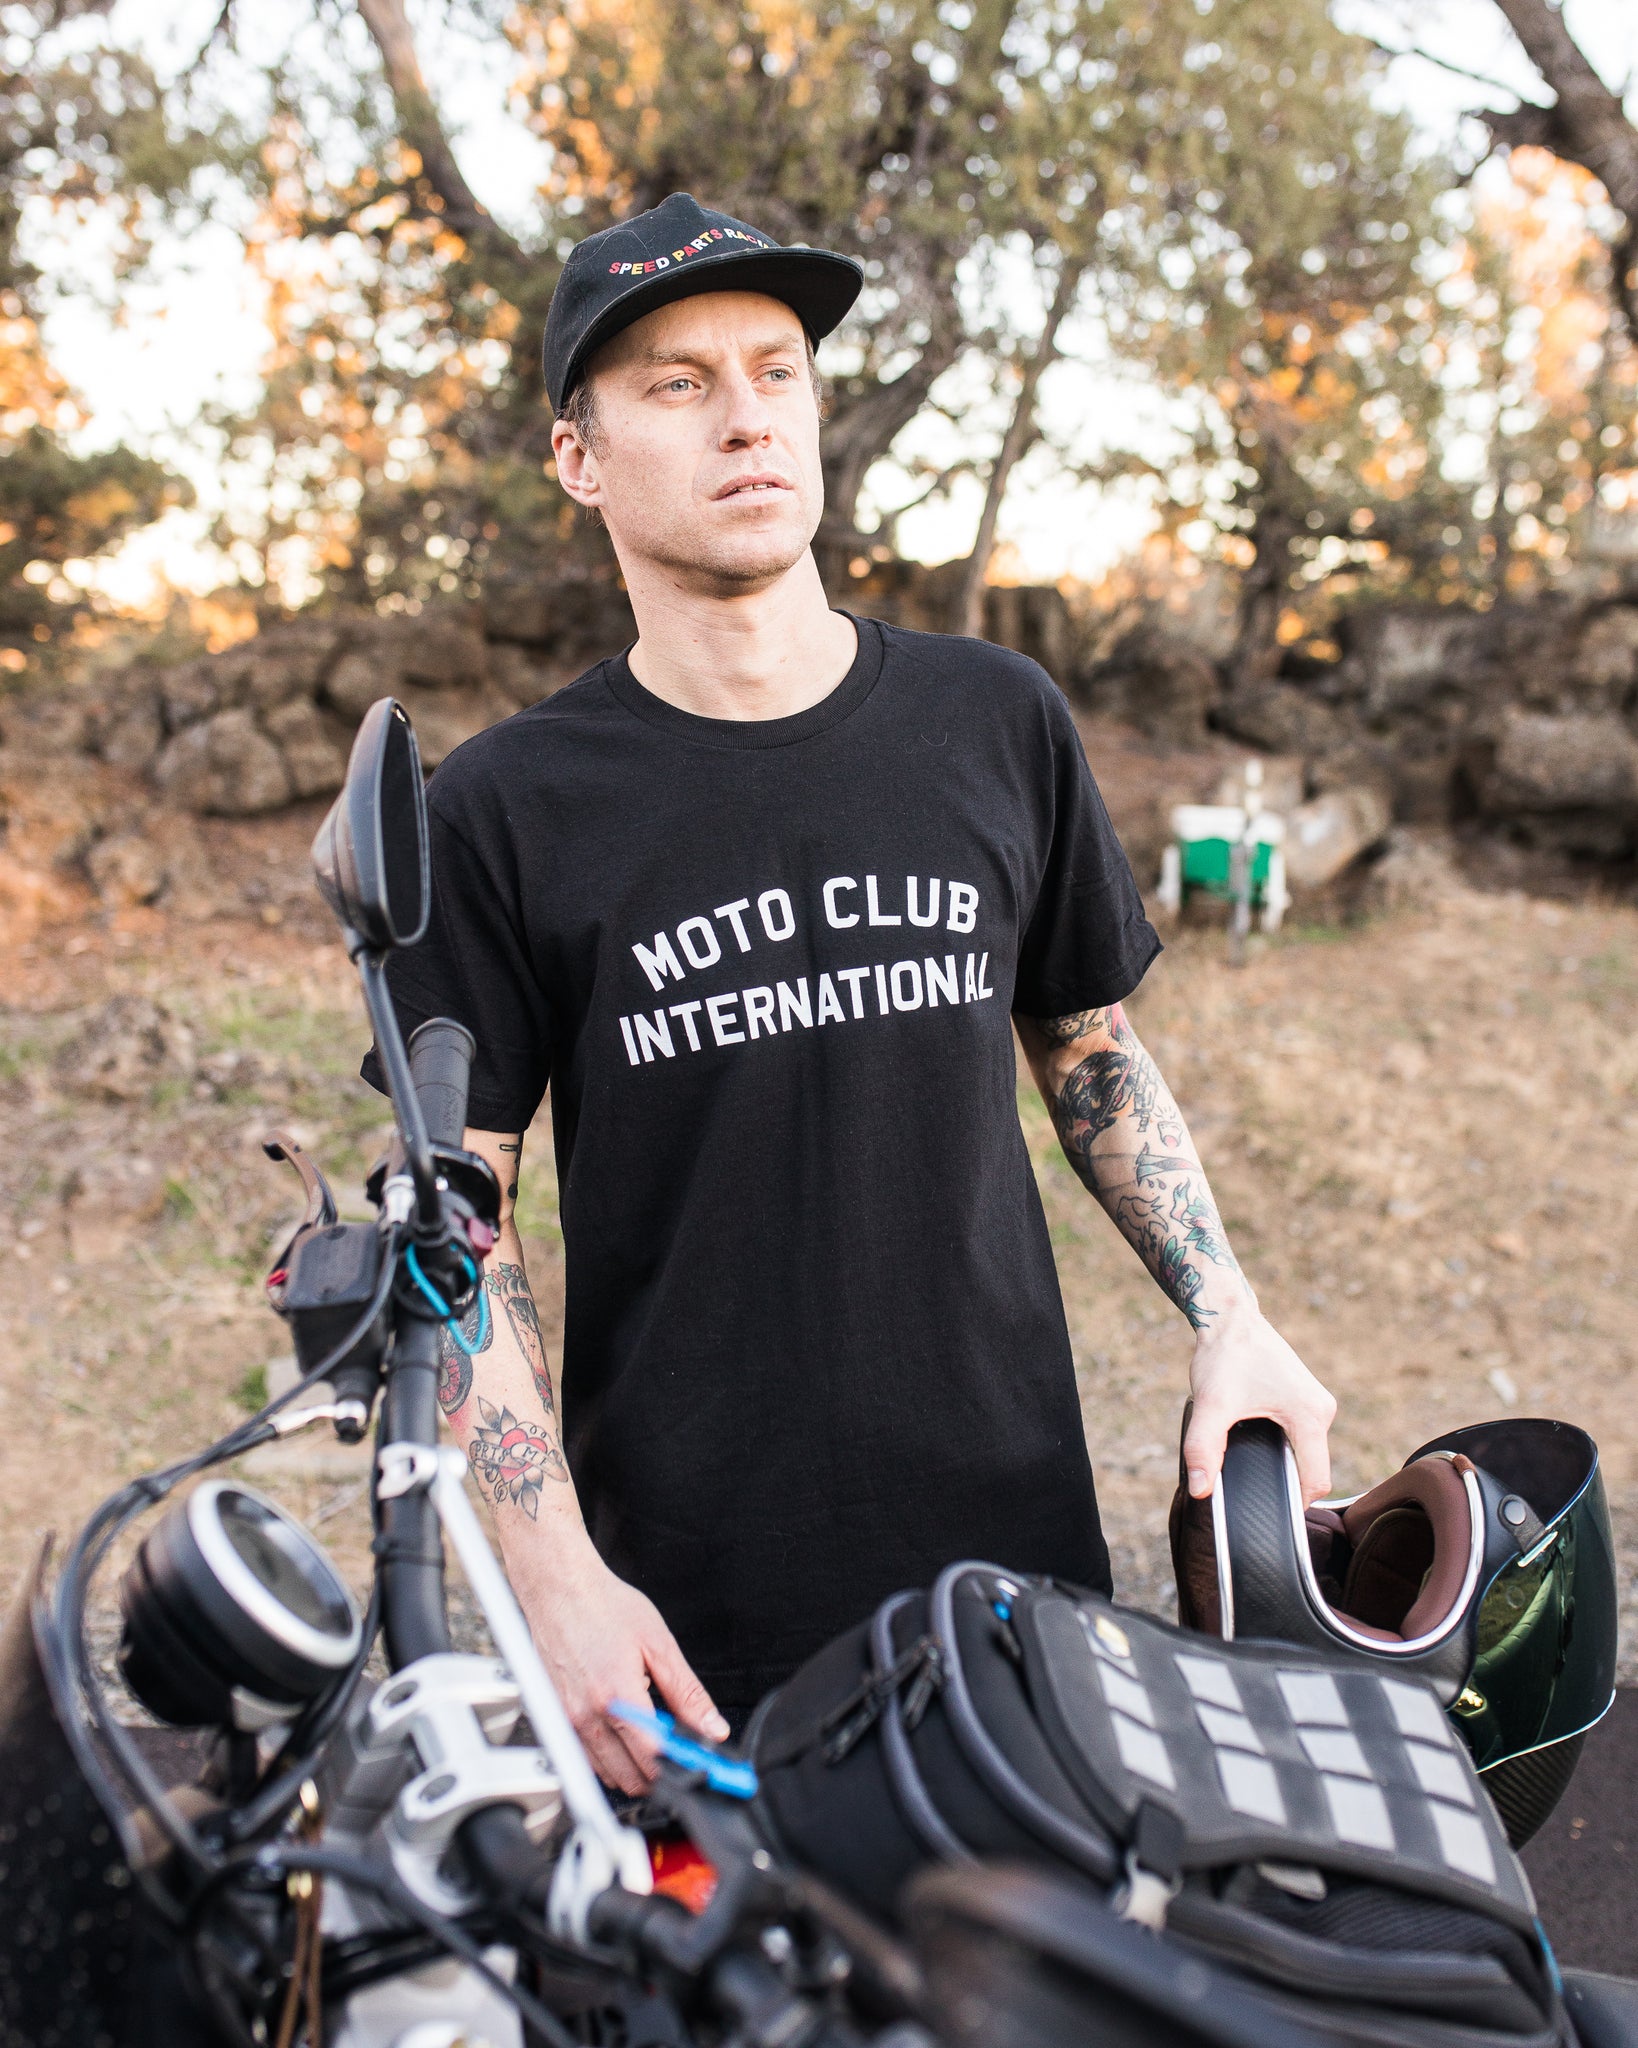 Homem Primark Tops E T-Shirts  T-Shirt West Coast Motor Club